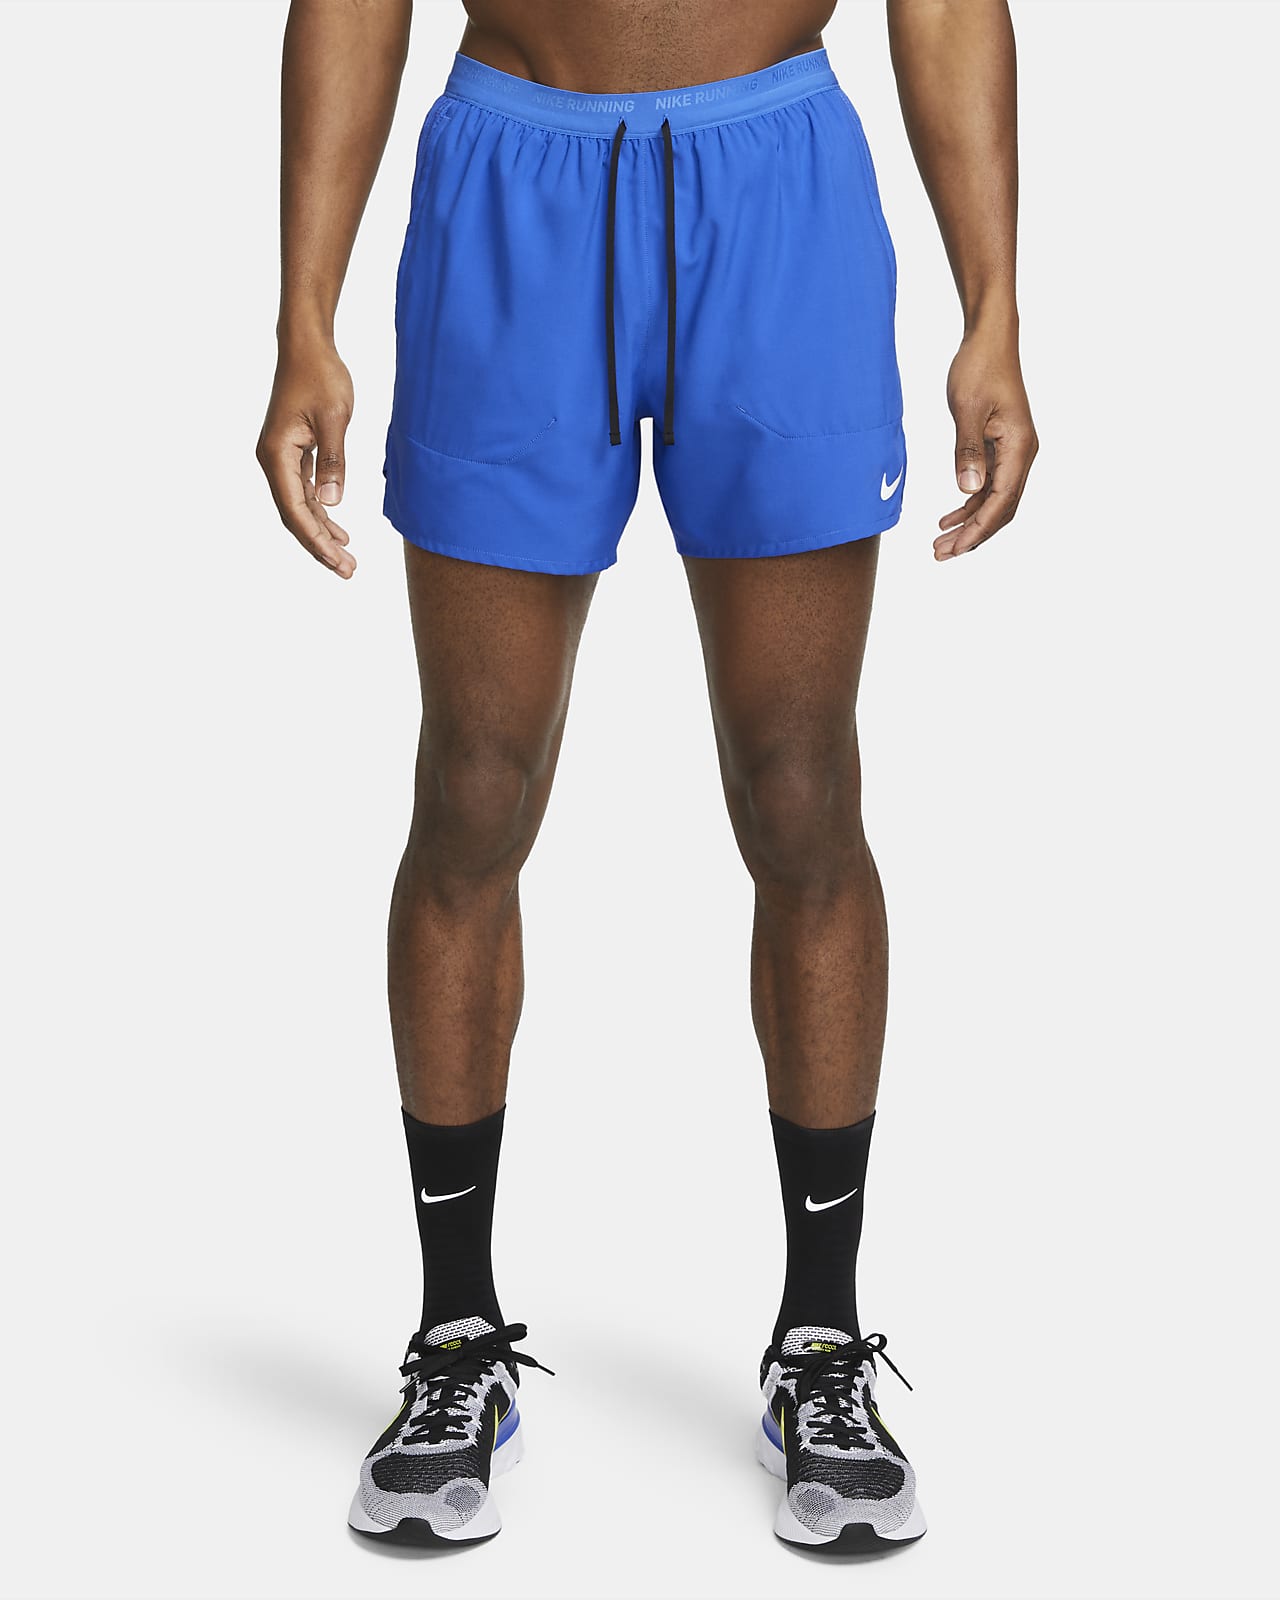 Shorts de running con ropa interior Dri-FIT de 12.5 cm para hombre Nike Nike.com